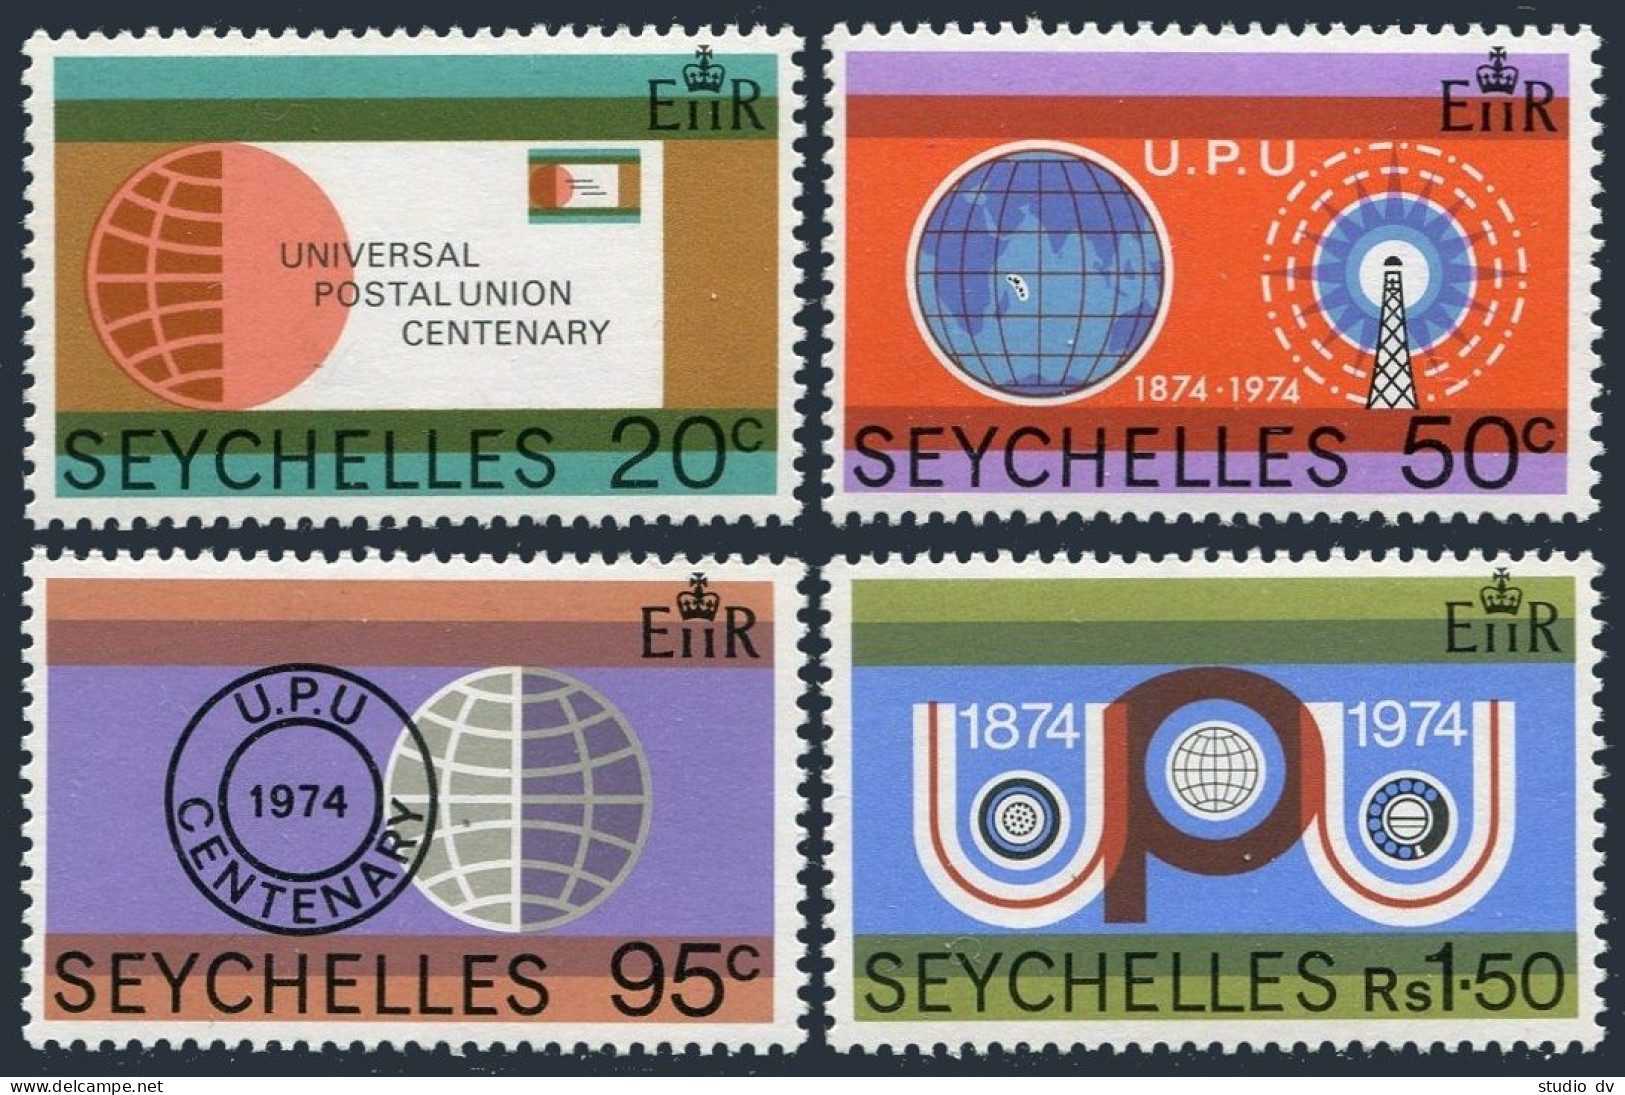 Seychelles 317-320,MNH.Michel 322-325. UPU-100.Globe,envelope,cancellation. - Seychelles (1976-...)